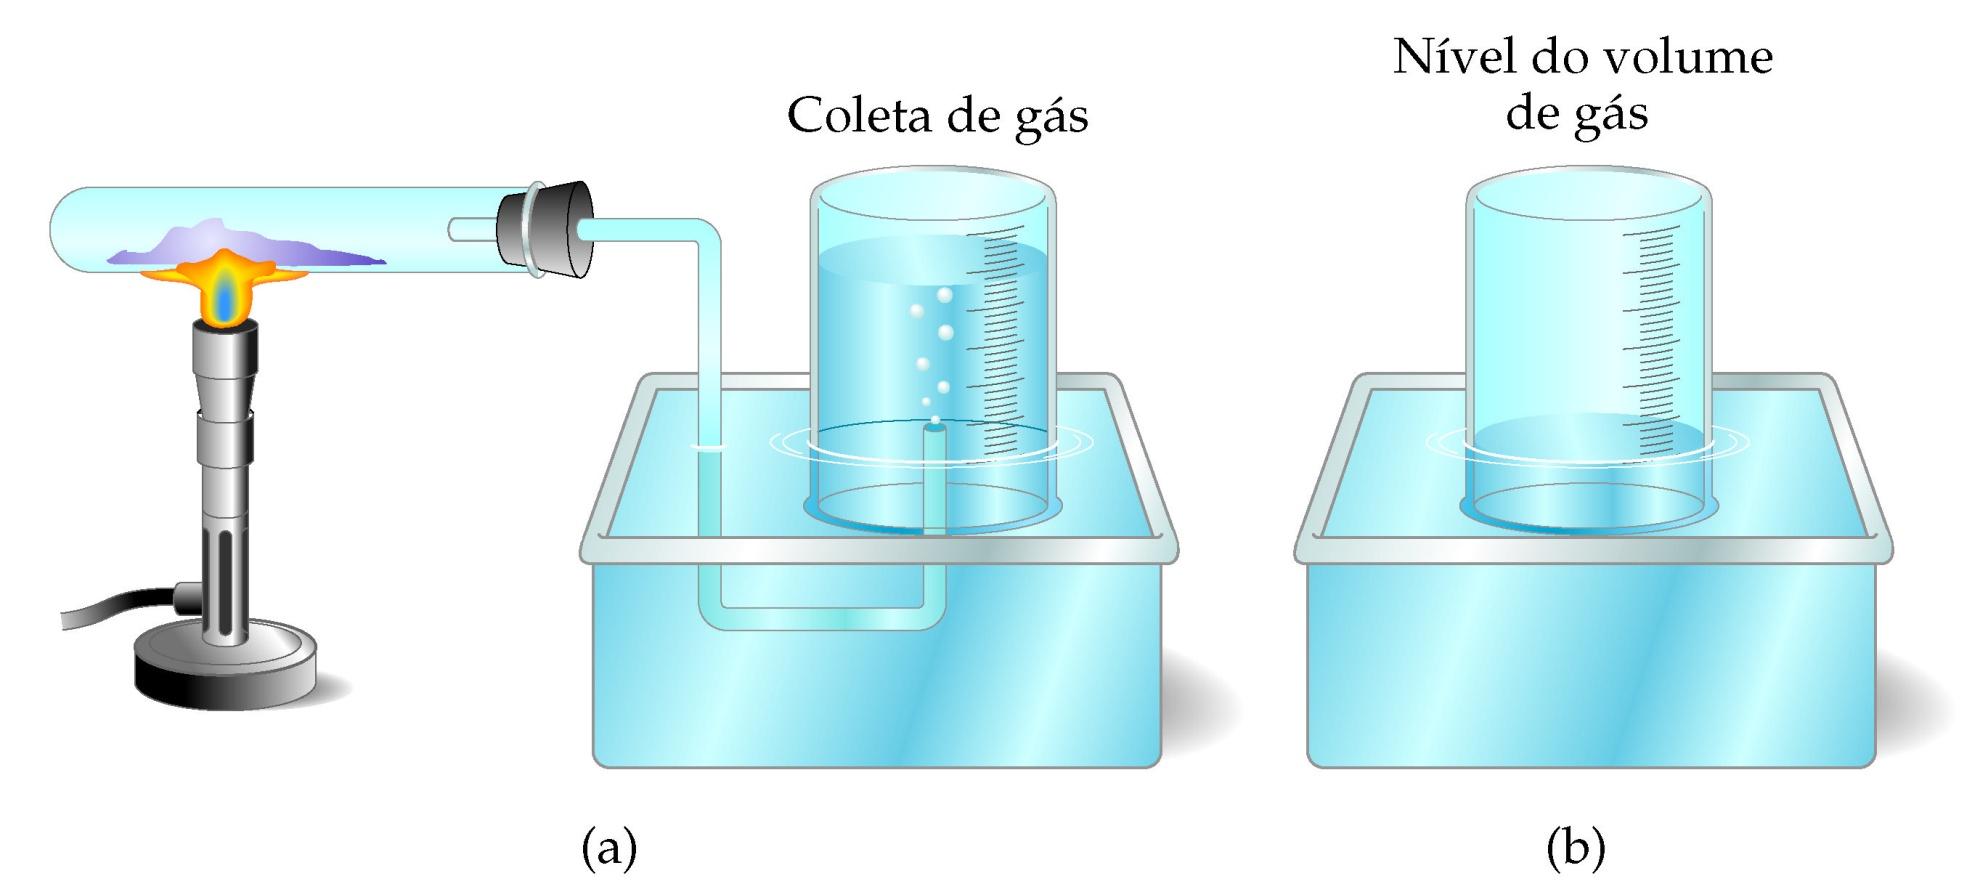 Mistura de gases